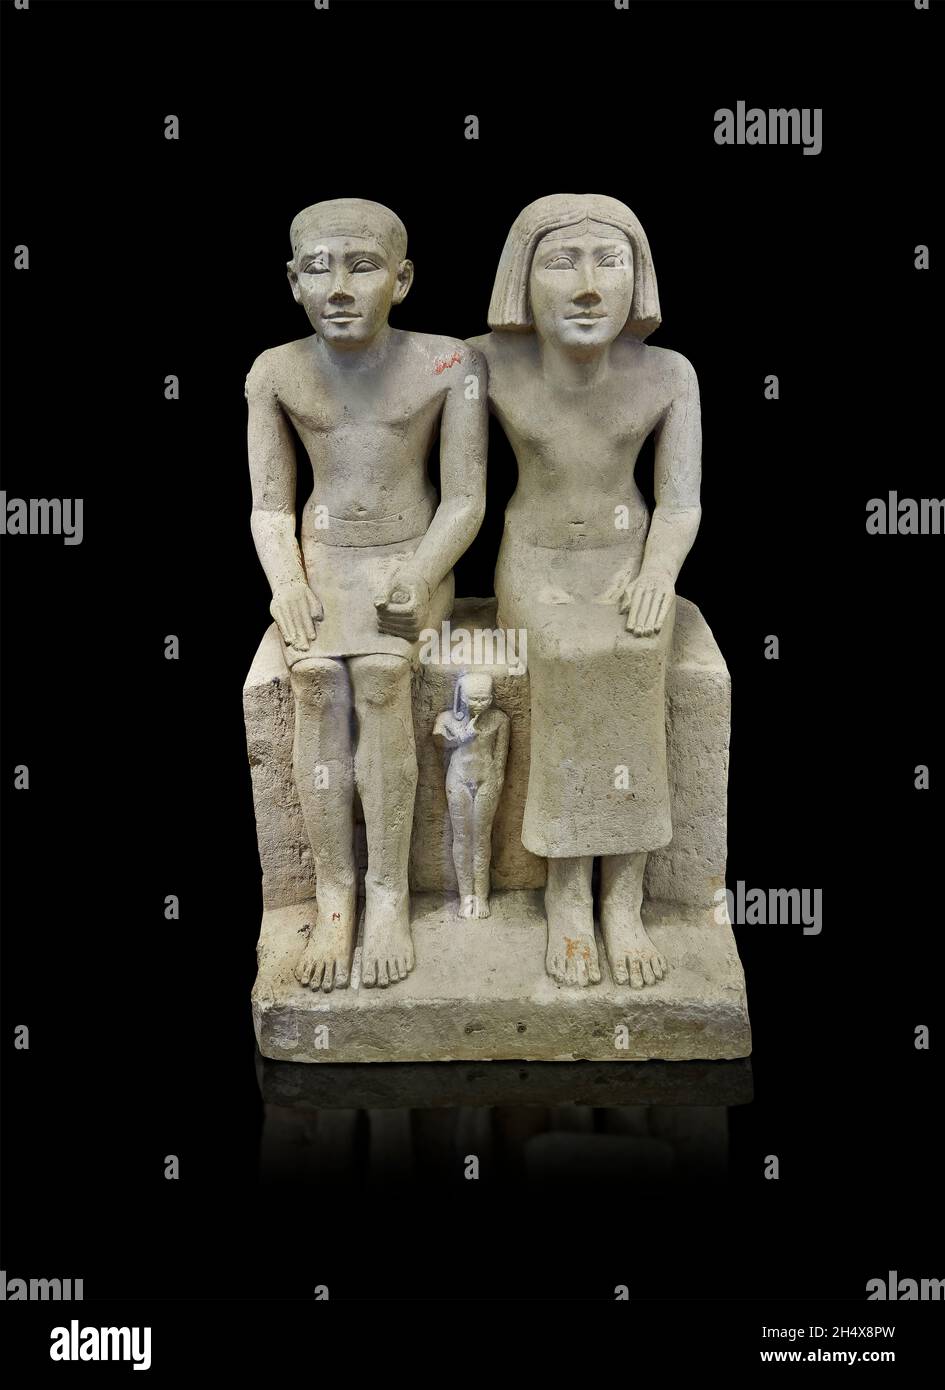 Estatua egipcia escultura de una pareja casada e hijo, 2620-2500, dinastía 4yj, piedra caliza. Museo del Louvre A44. Foto de stock